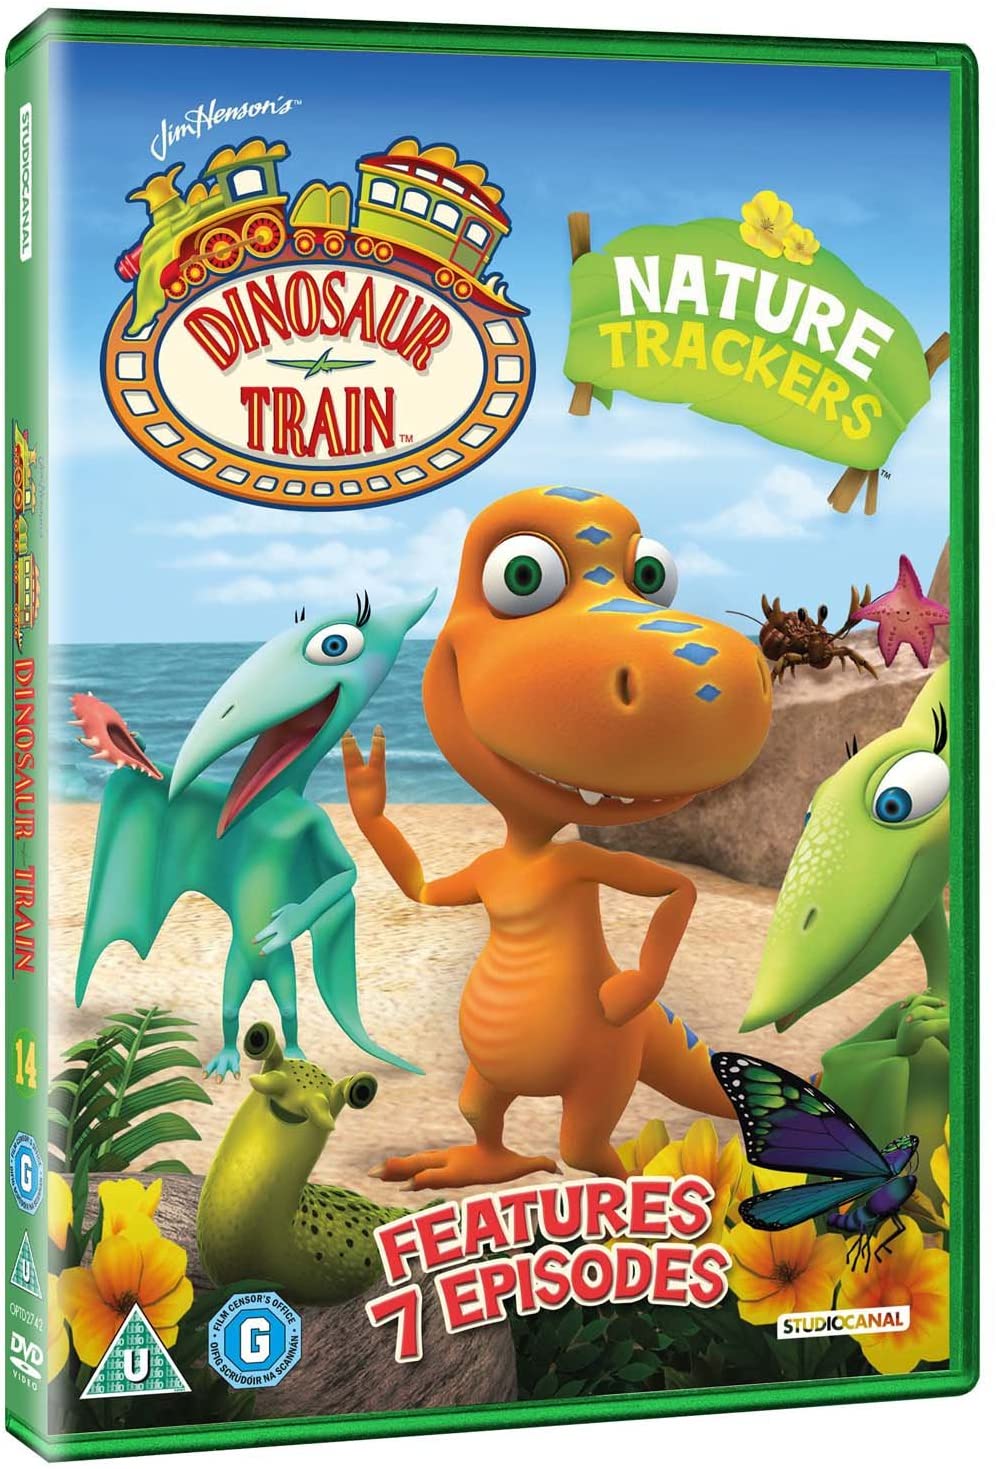 Dinosaur Train - Nature Trackers [DVD] [2015]